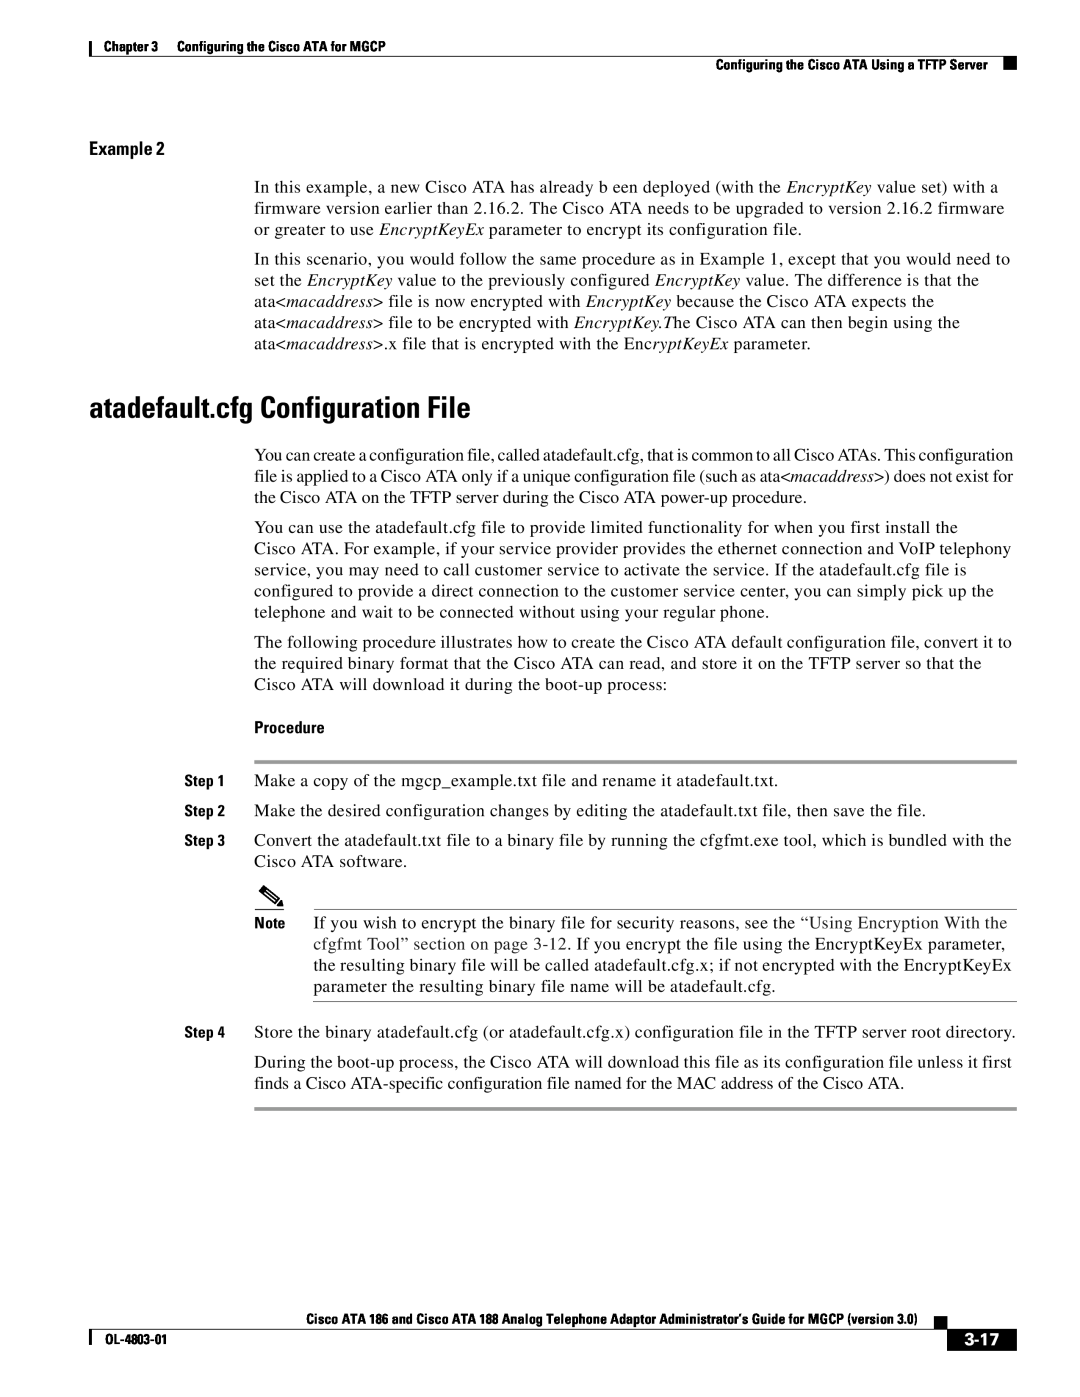 Cisco Systems ATA 186 manual atadefault.cfg Configuration File, 3-17, Example, Procedure 